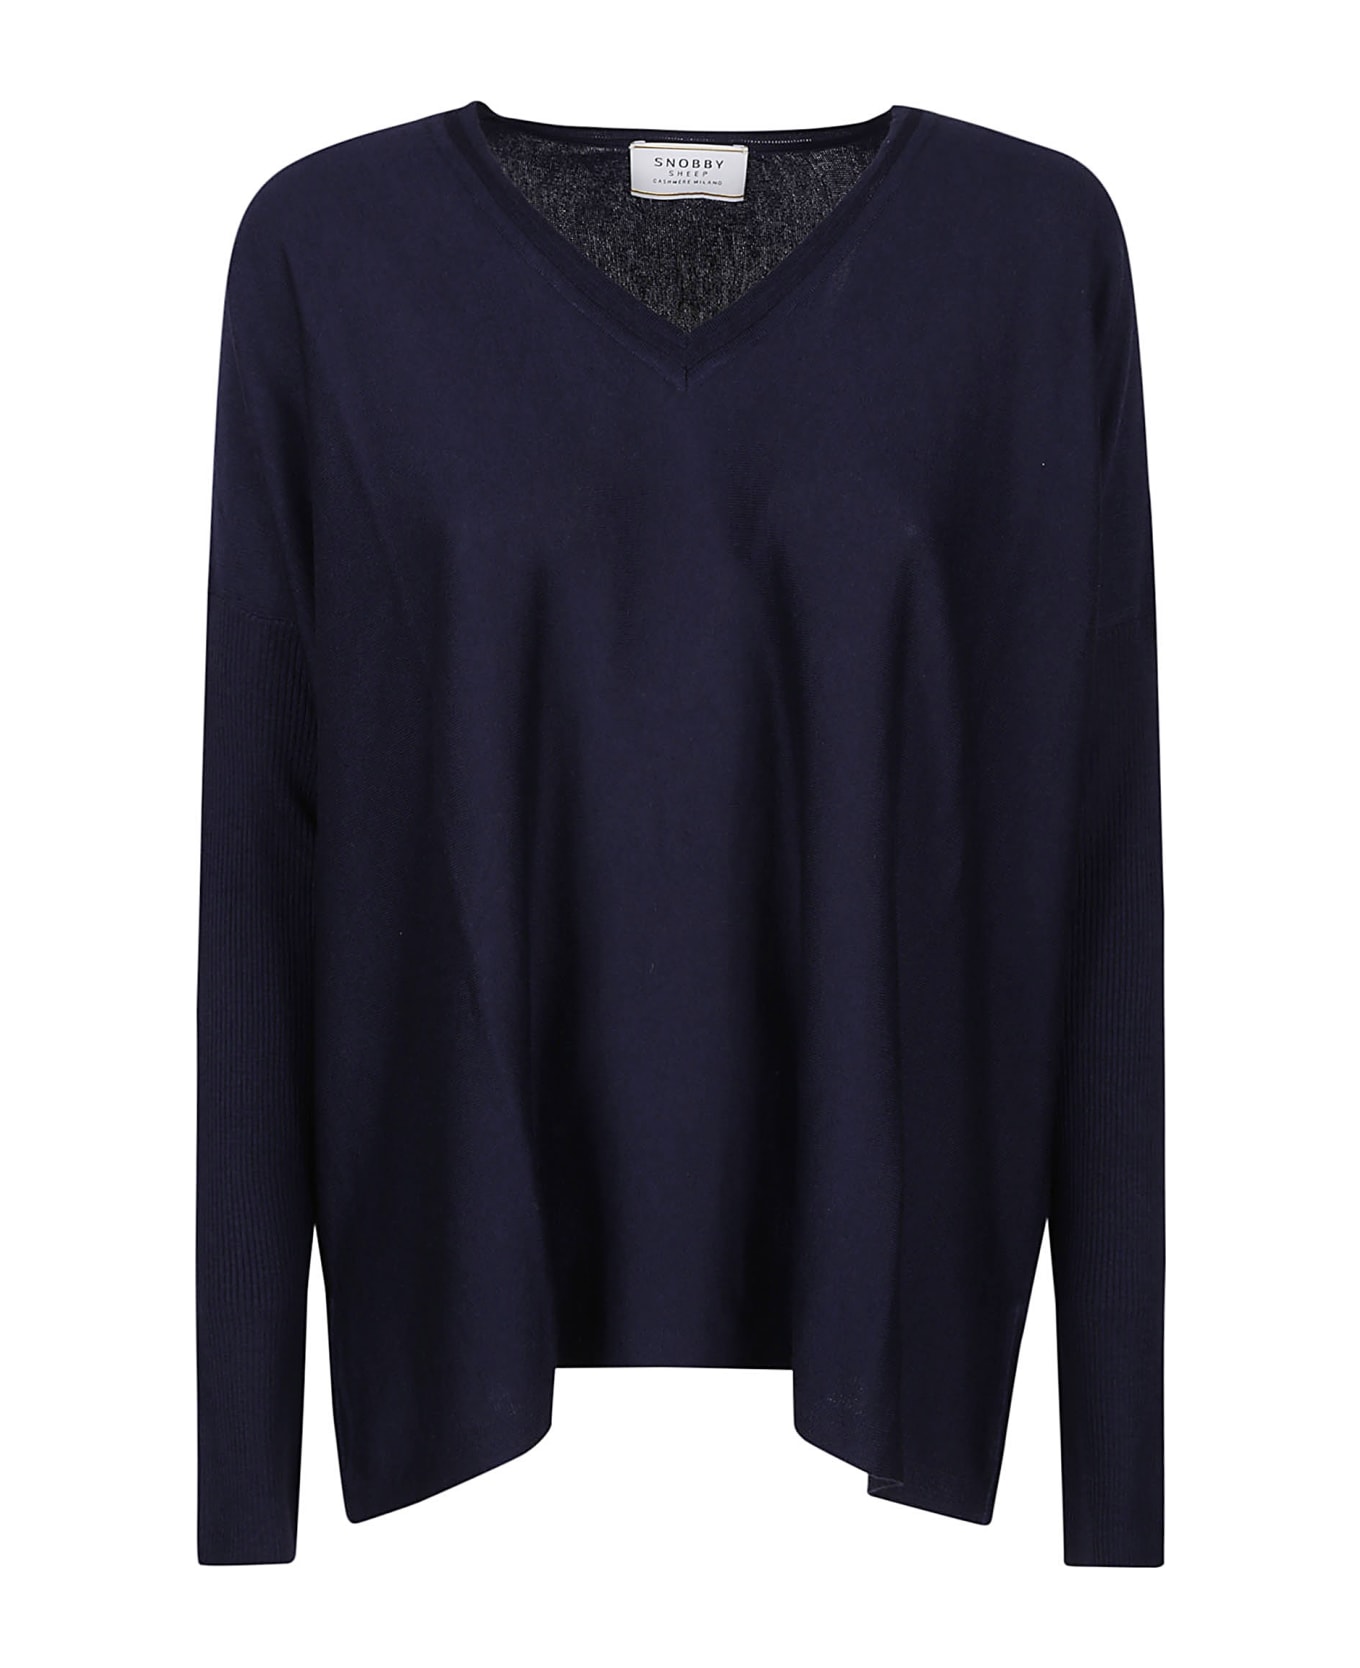 Snobby Sheep Oversize Sweater - Blue